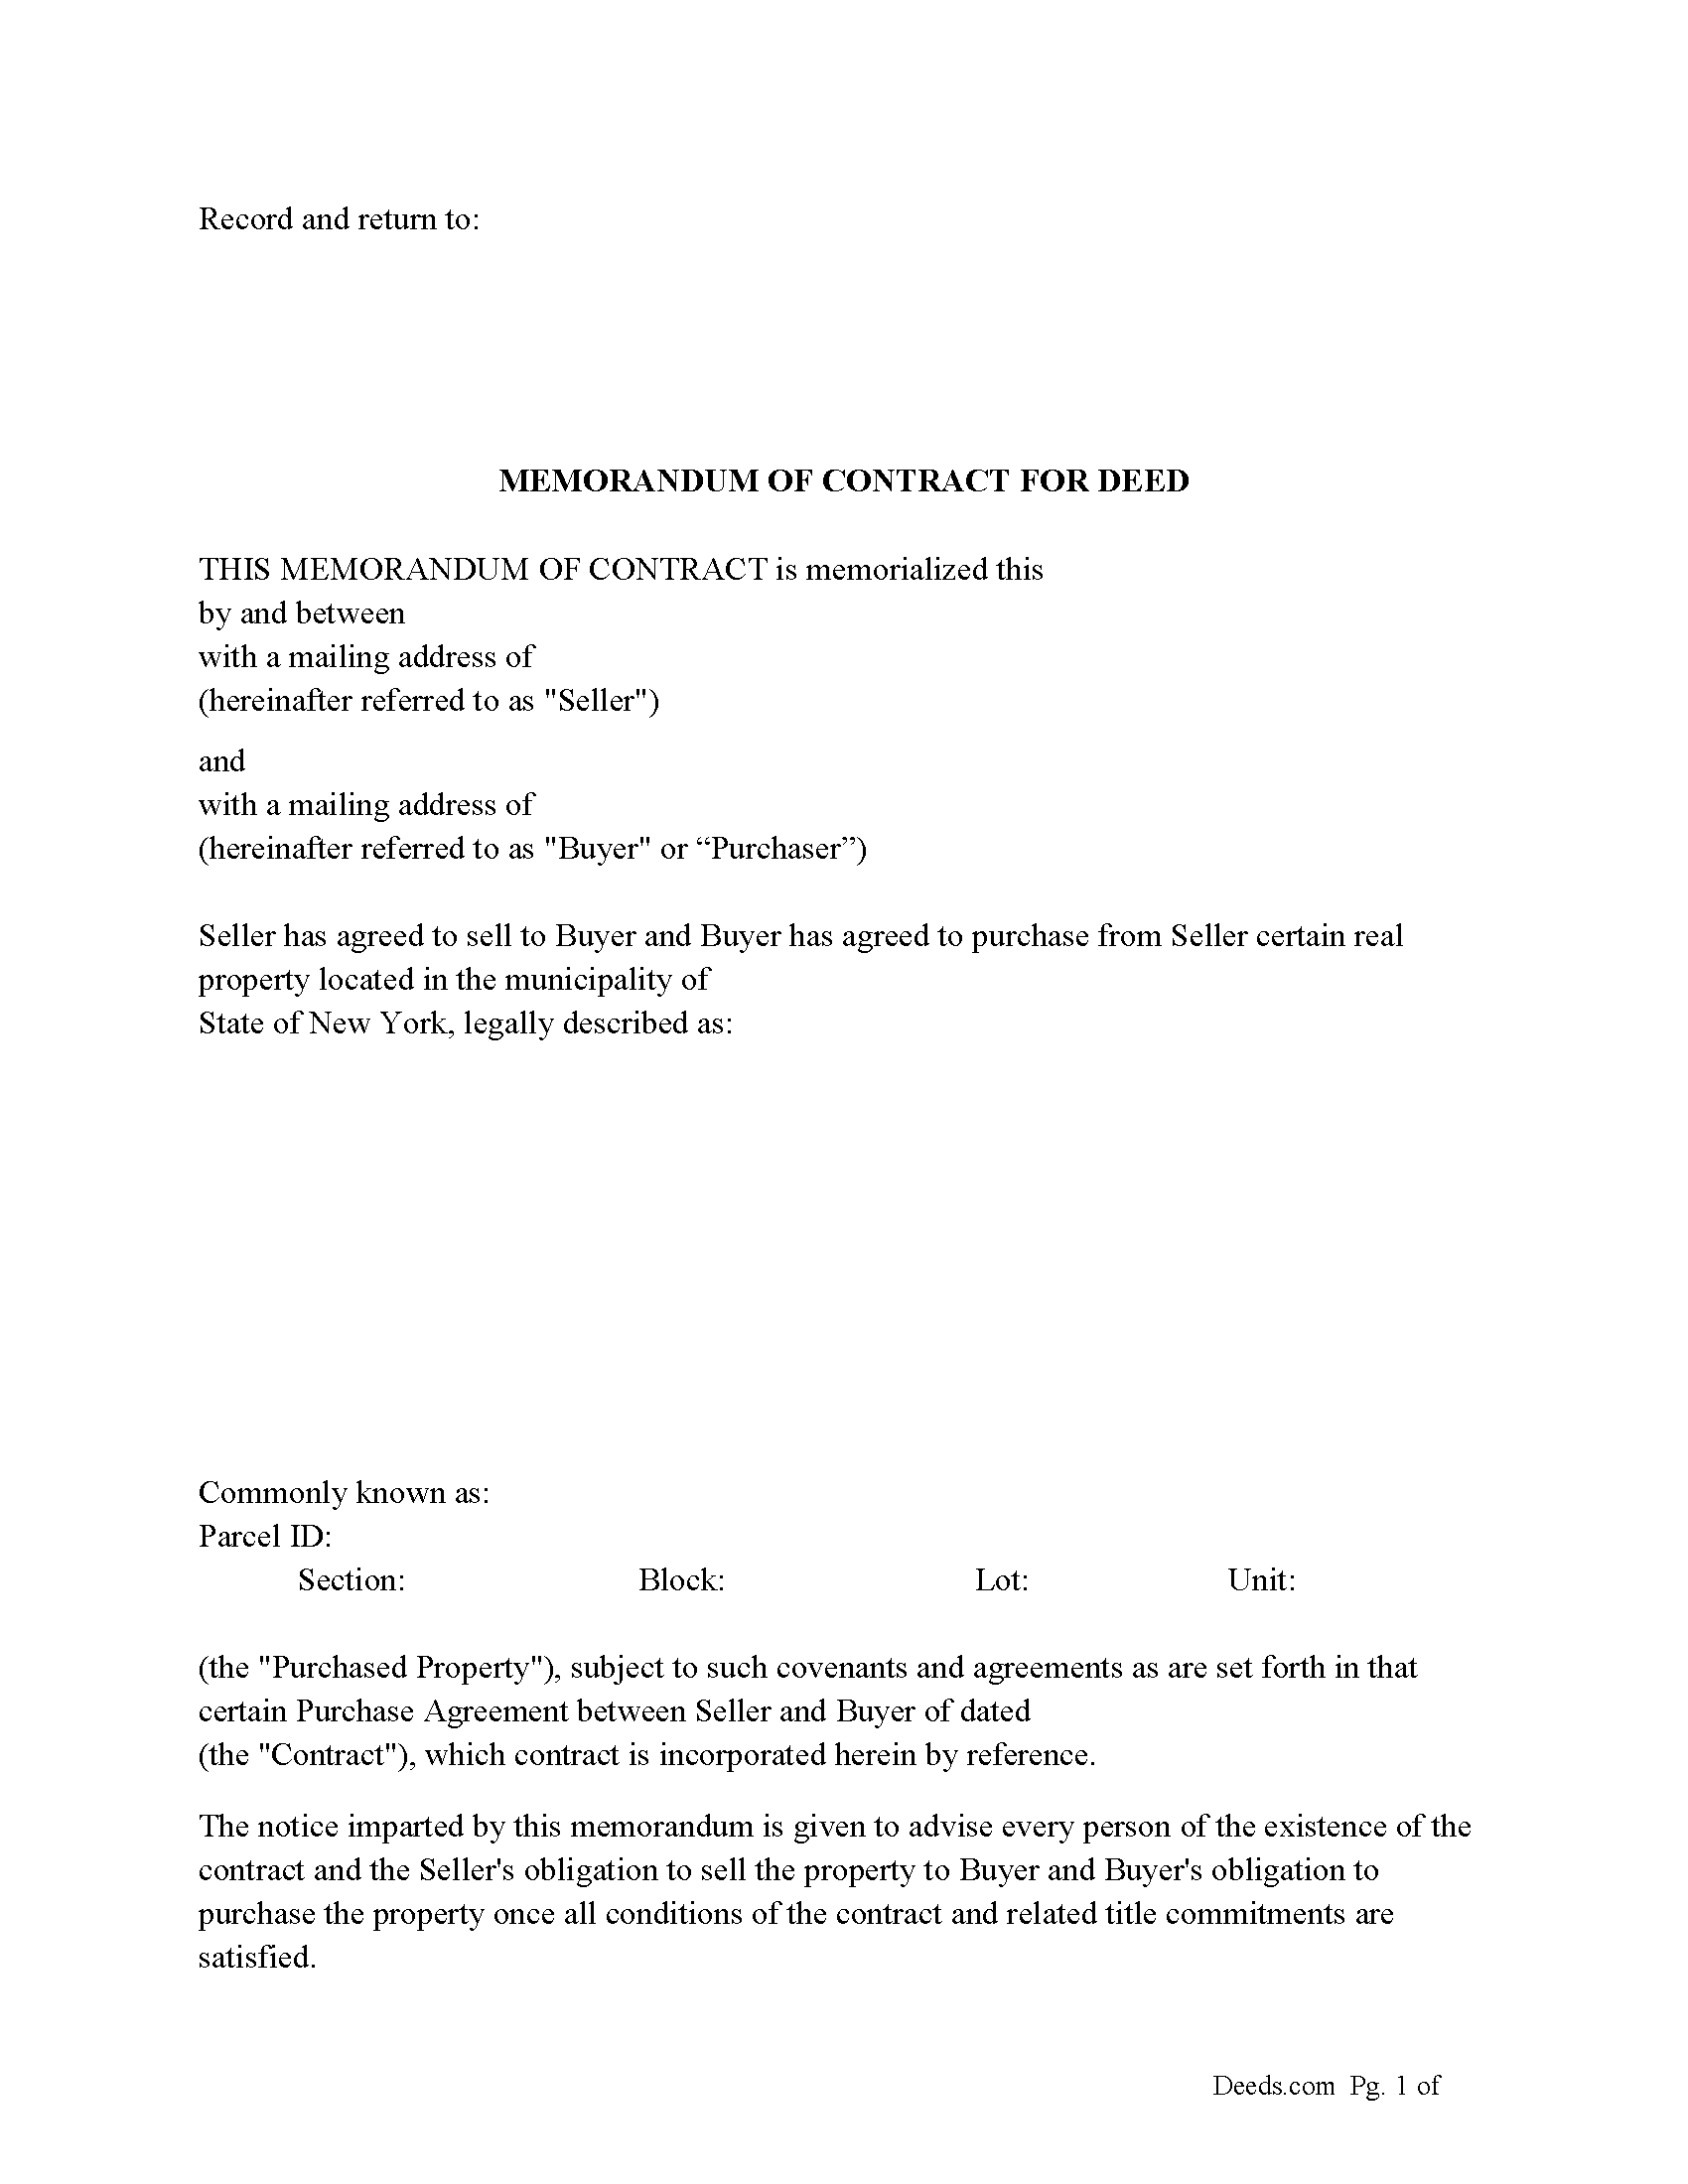 Wayne County Memorandum of Contract for Deed Form